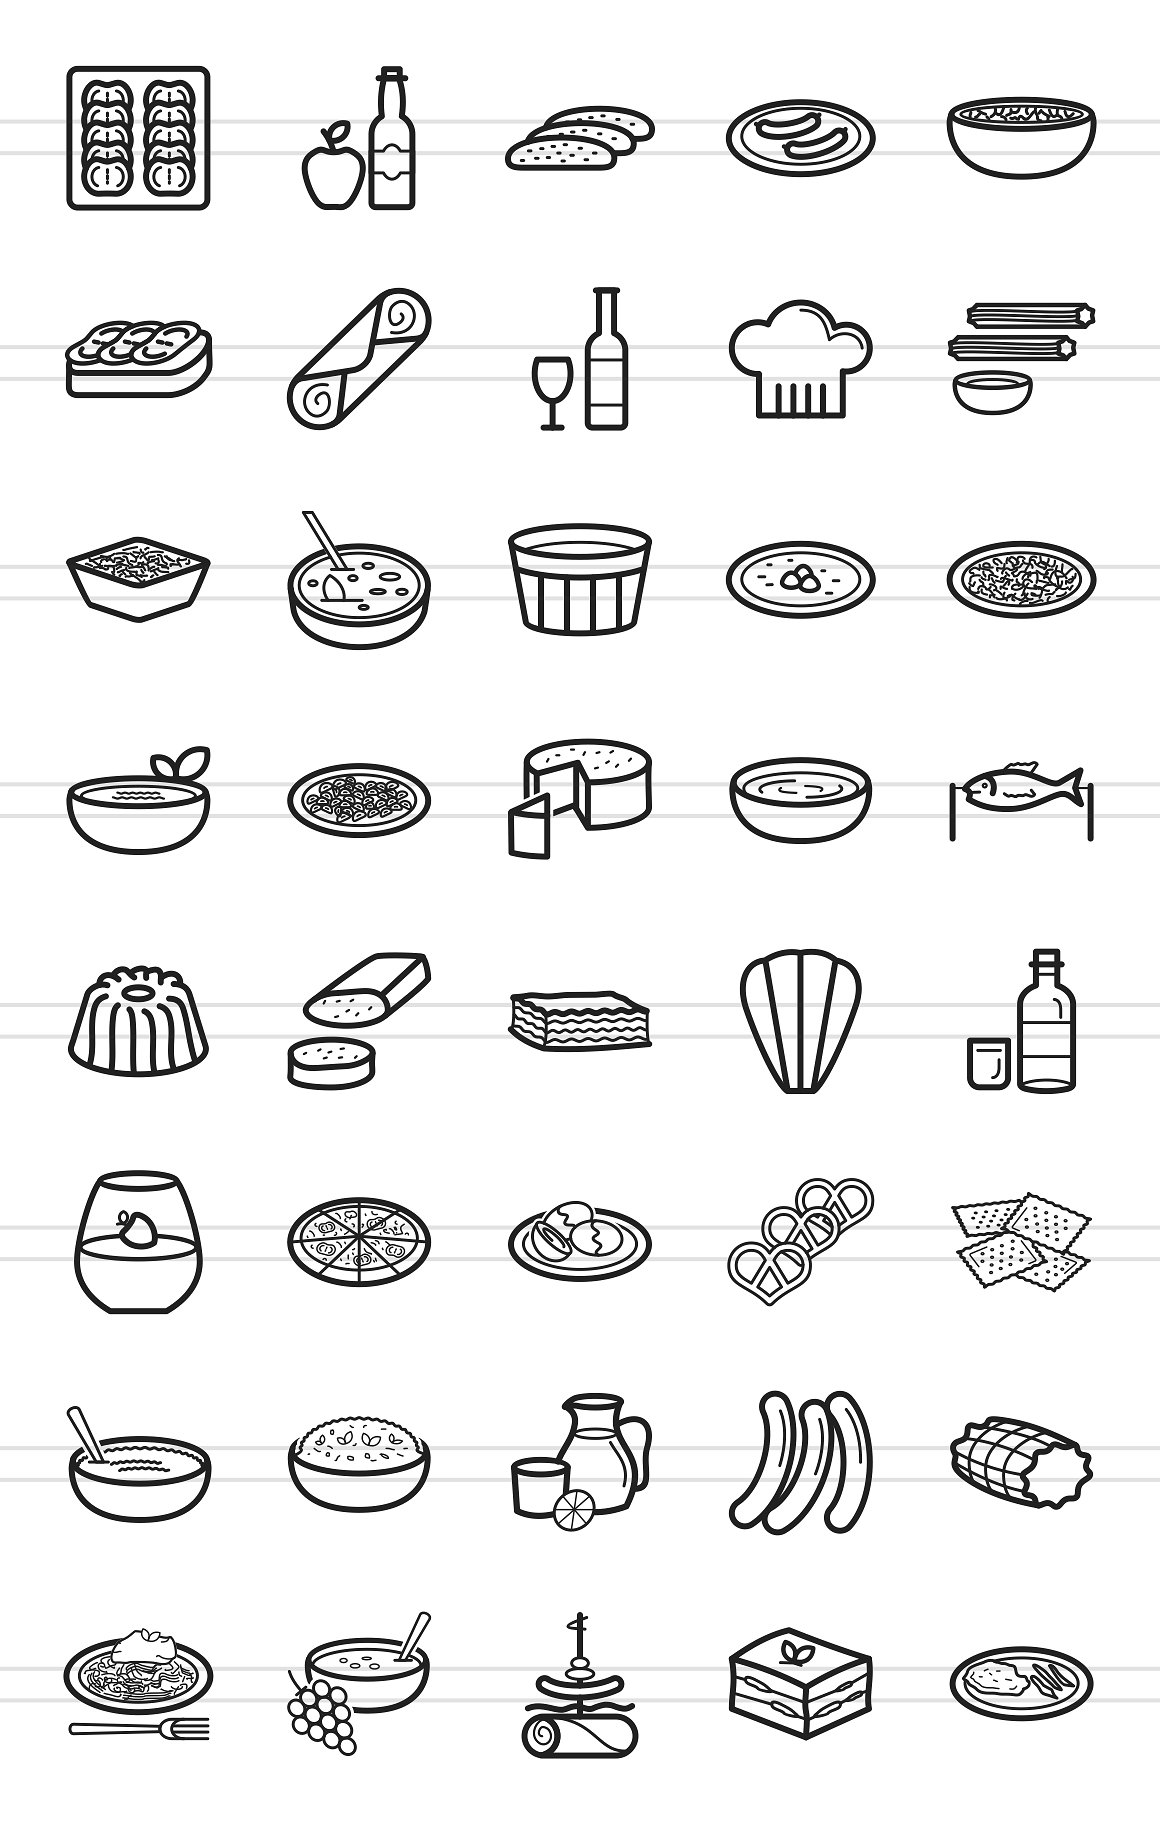 欧洲美食主题线框图标集 European Cuisine Line Icons插图(1)